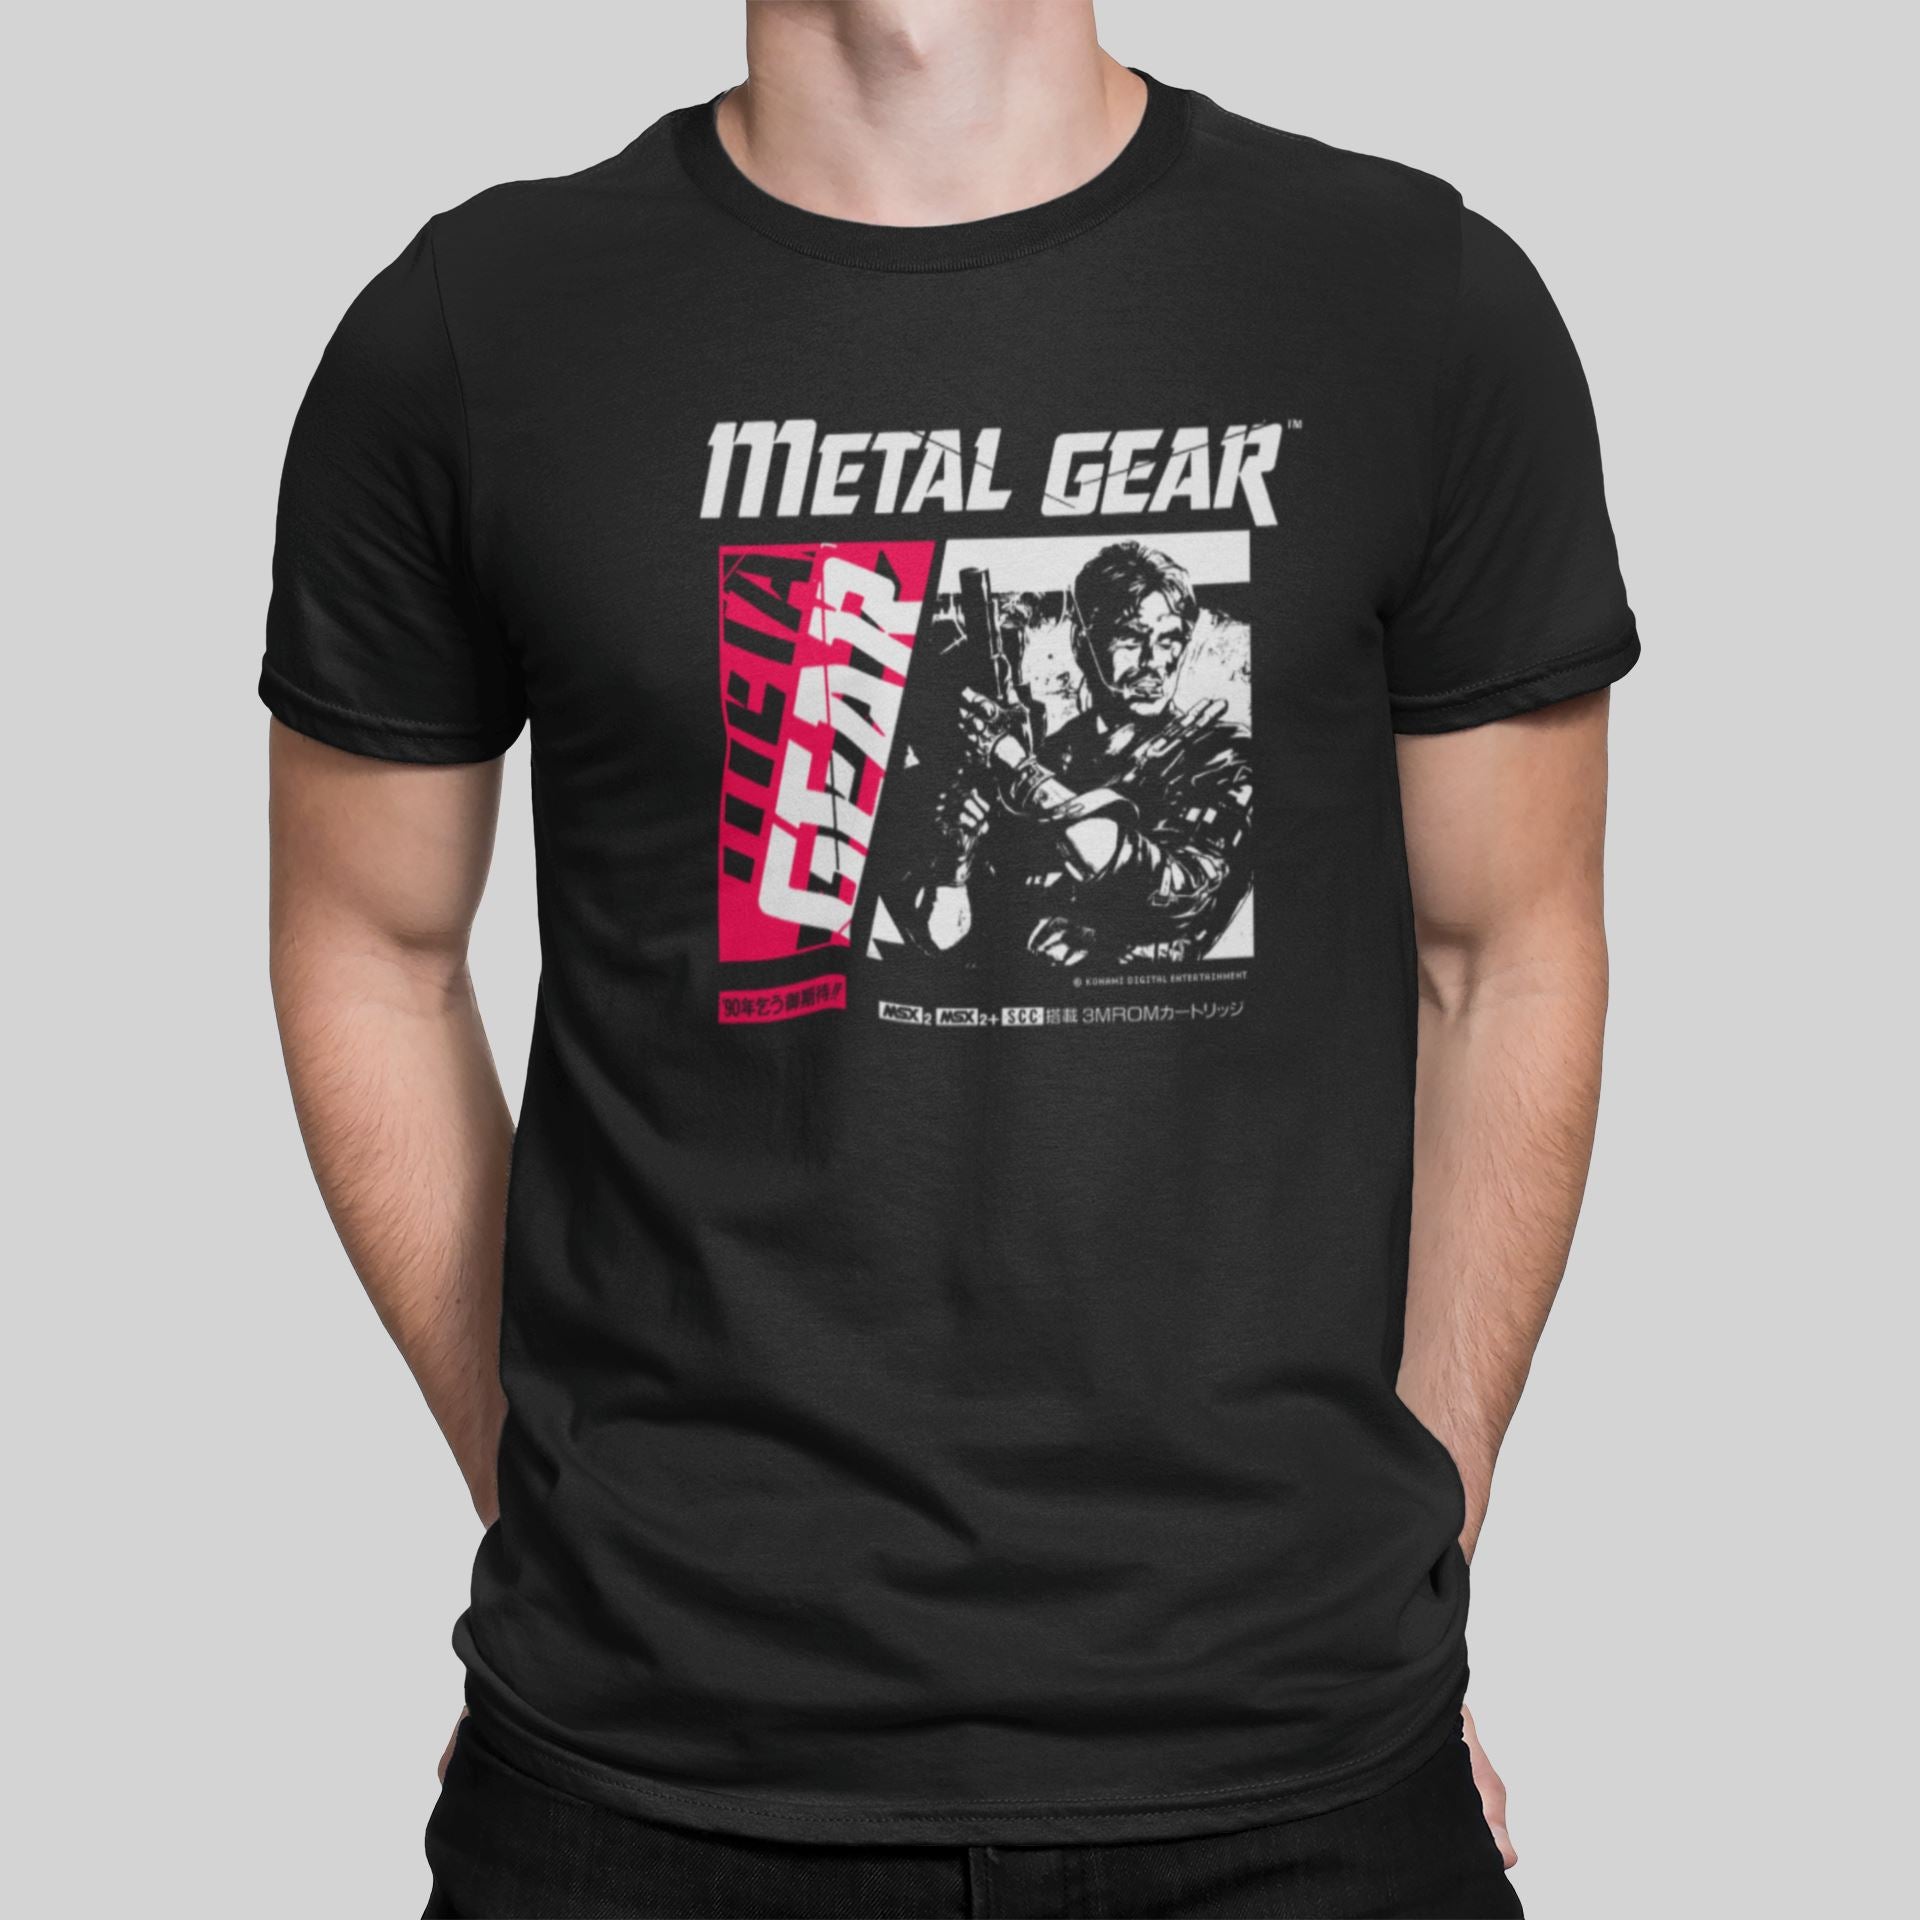 Metal Gear Retro Gaming T-Shirt T-Shirt Seven Squared Small 34-36" Black 